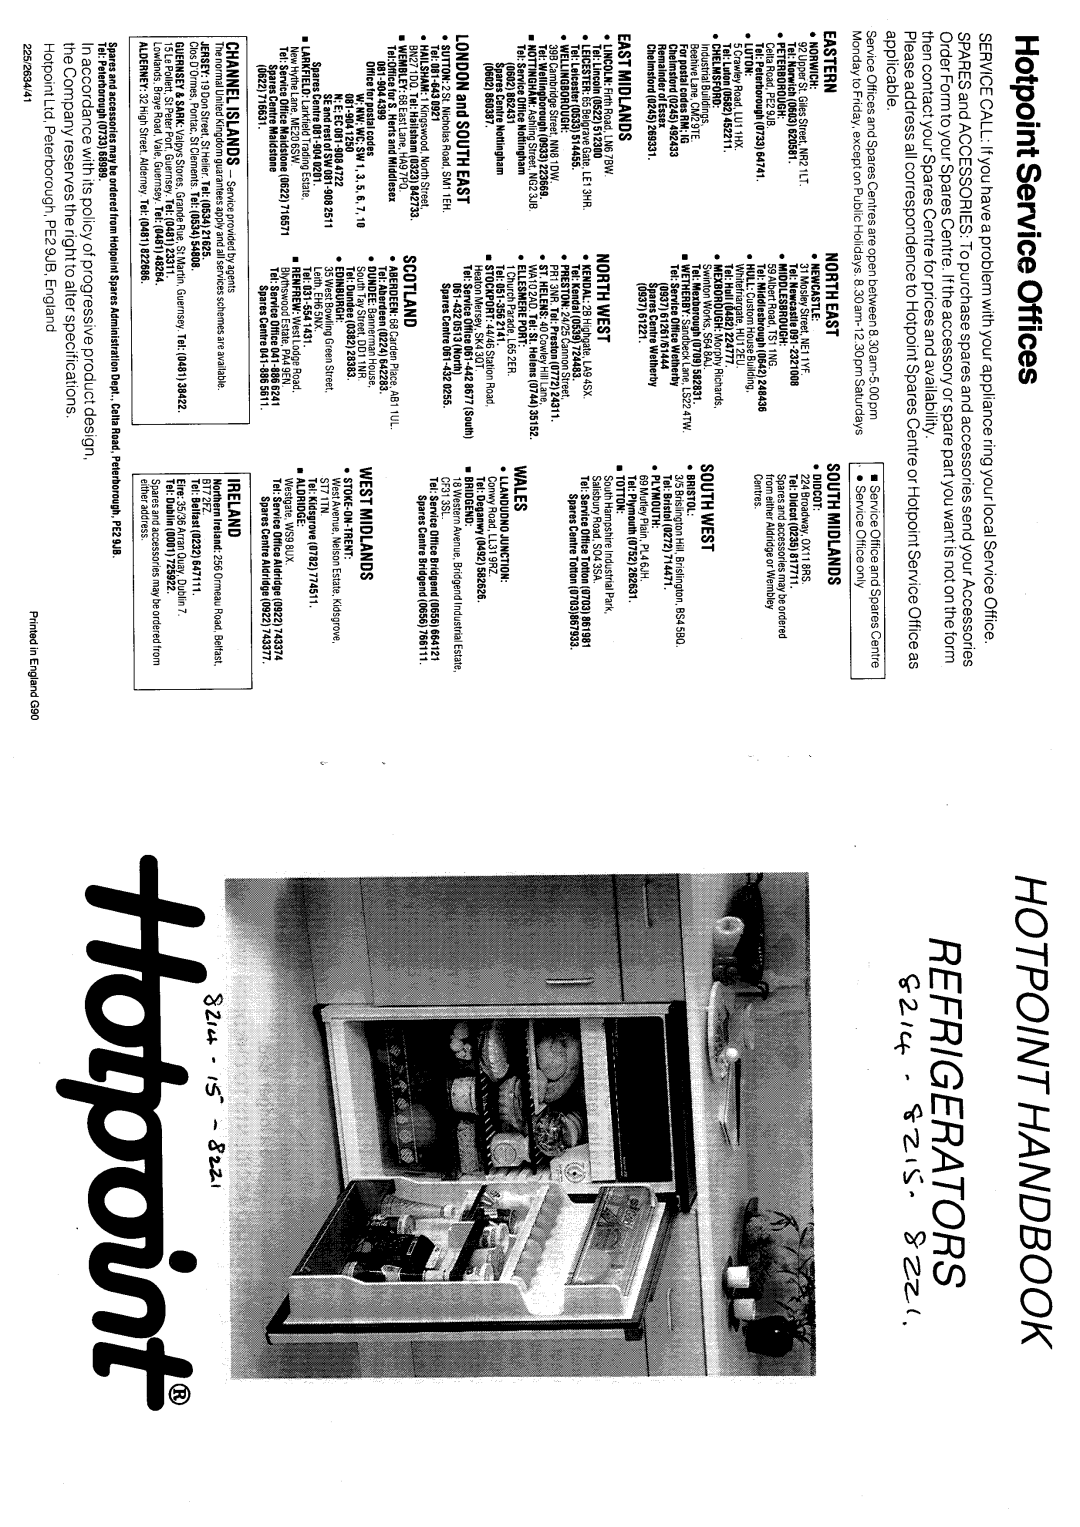 Hotpoint 8215 manual 